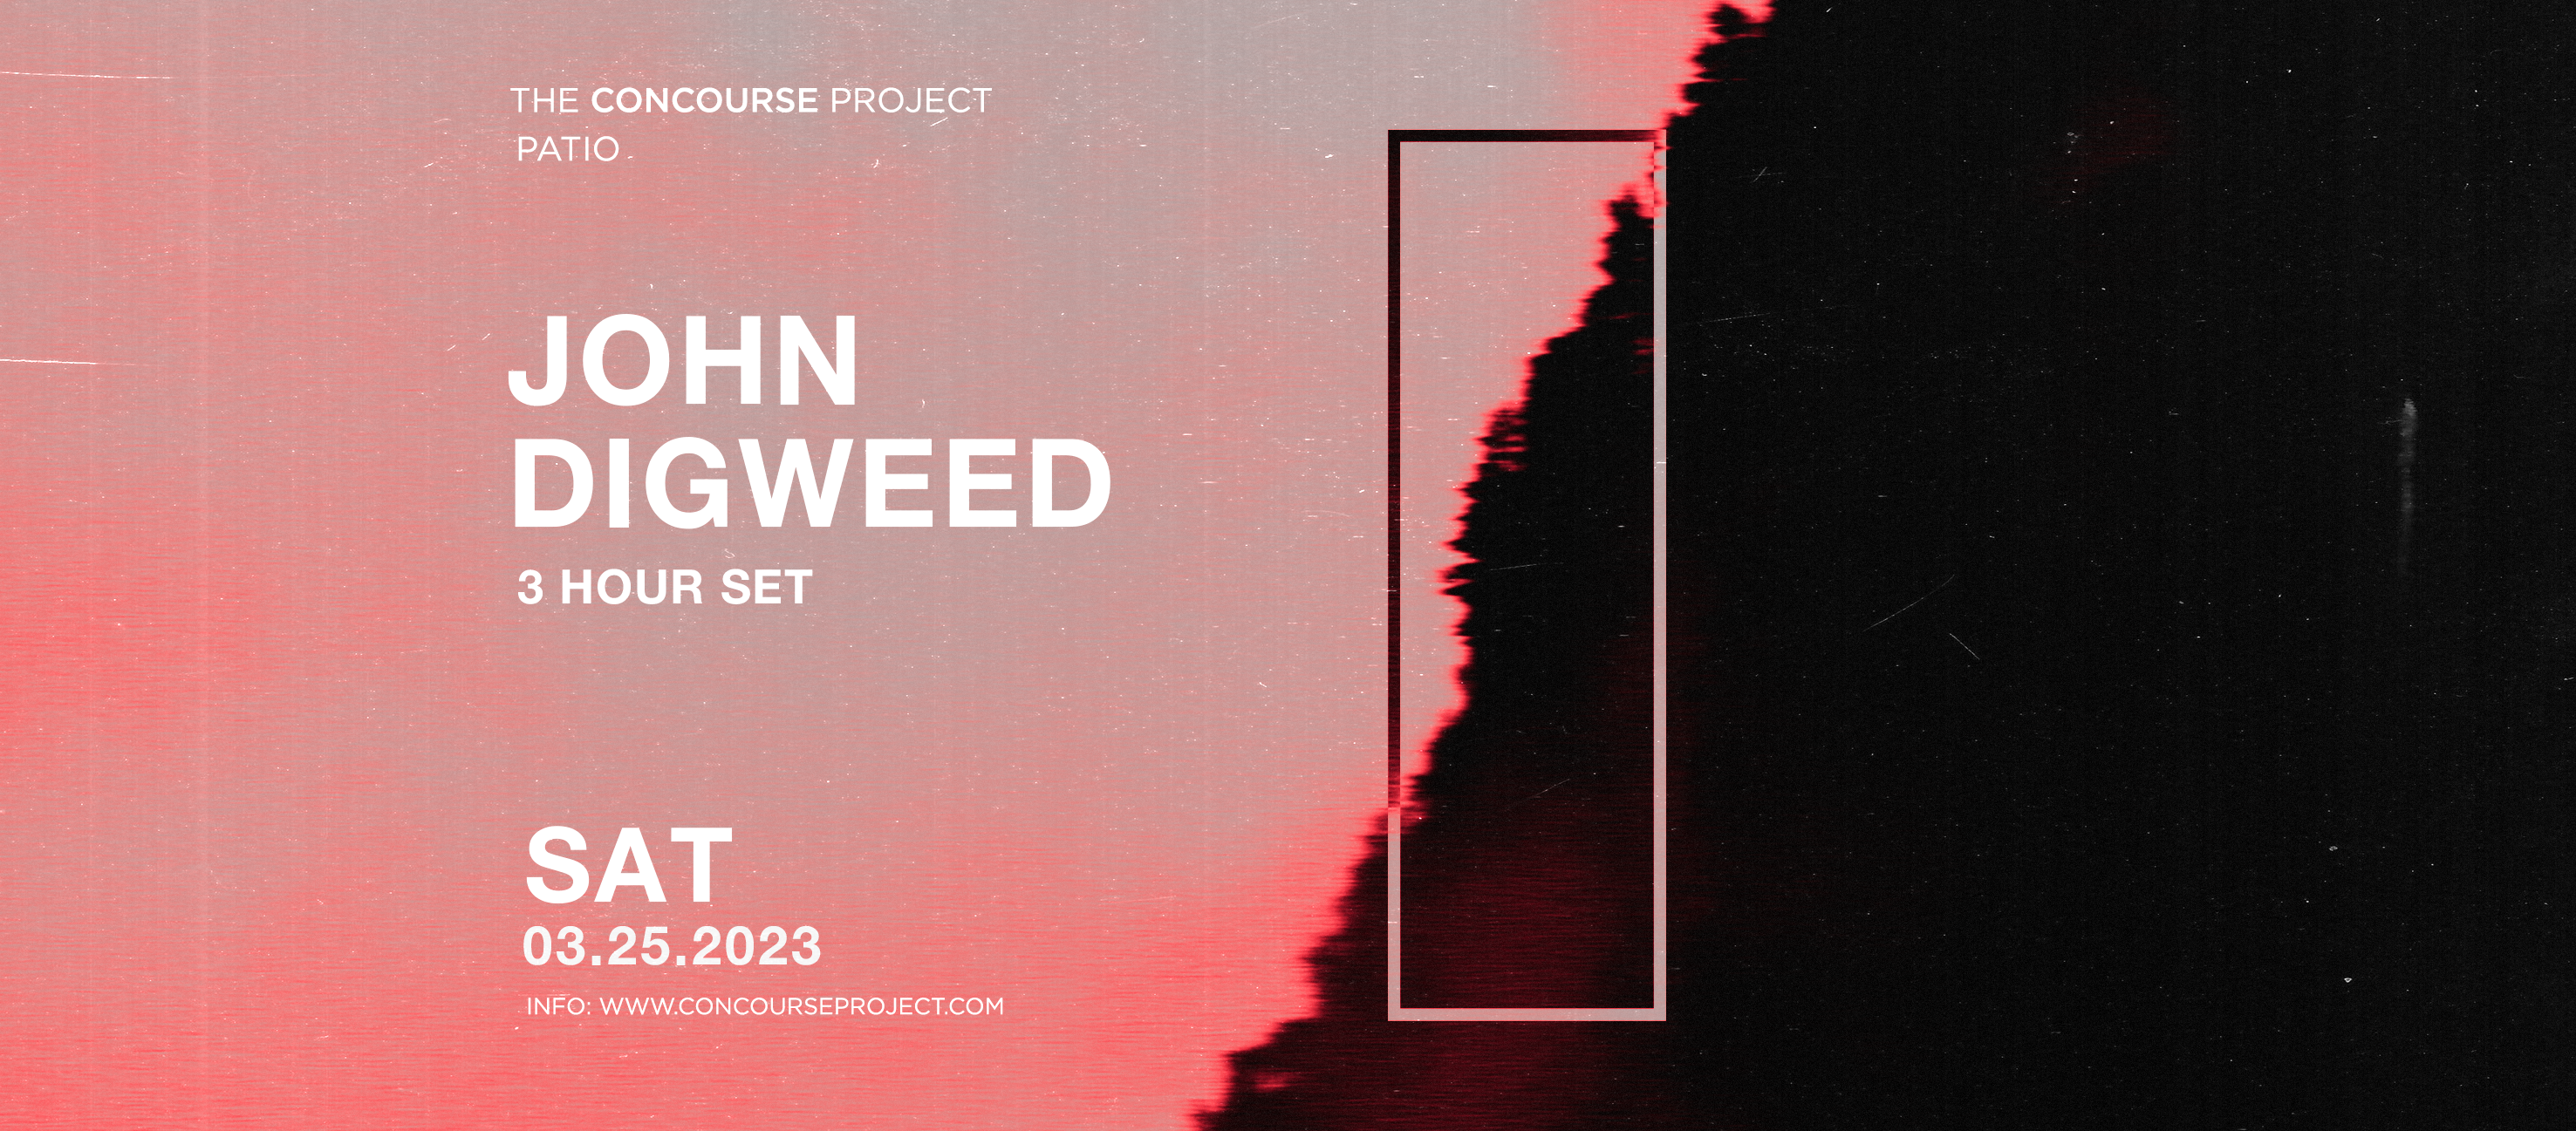 JOHN-DIGWEED-2023-FB-BANNER.png